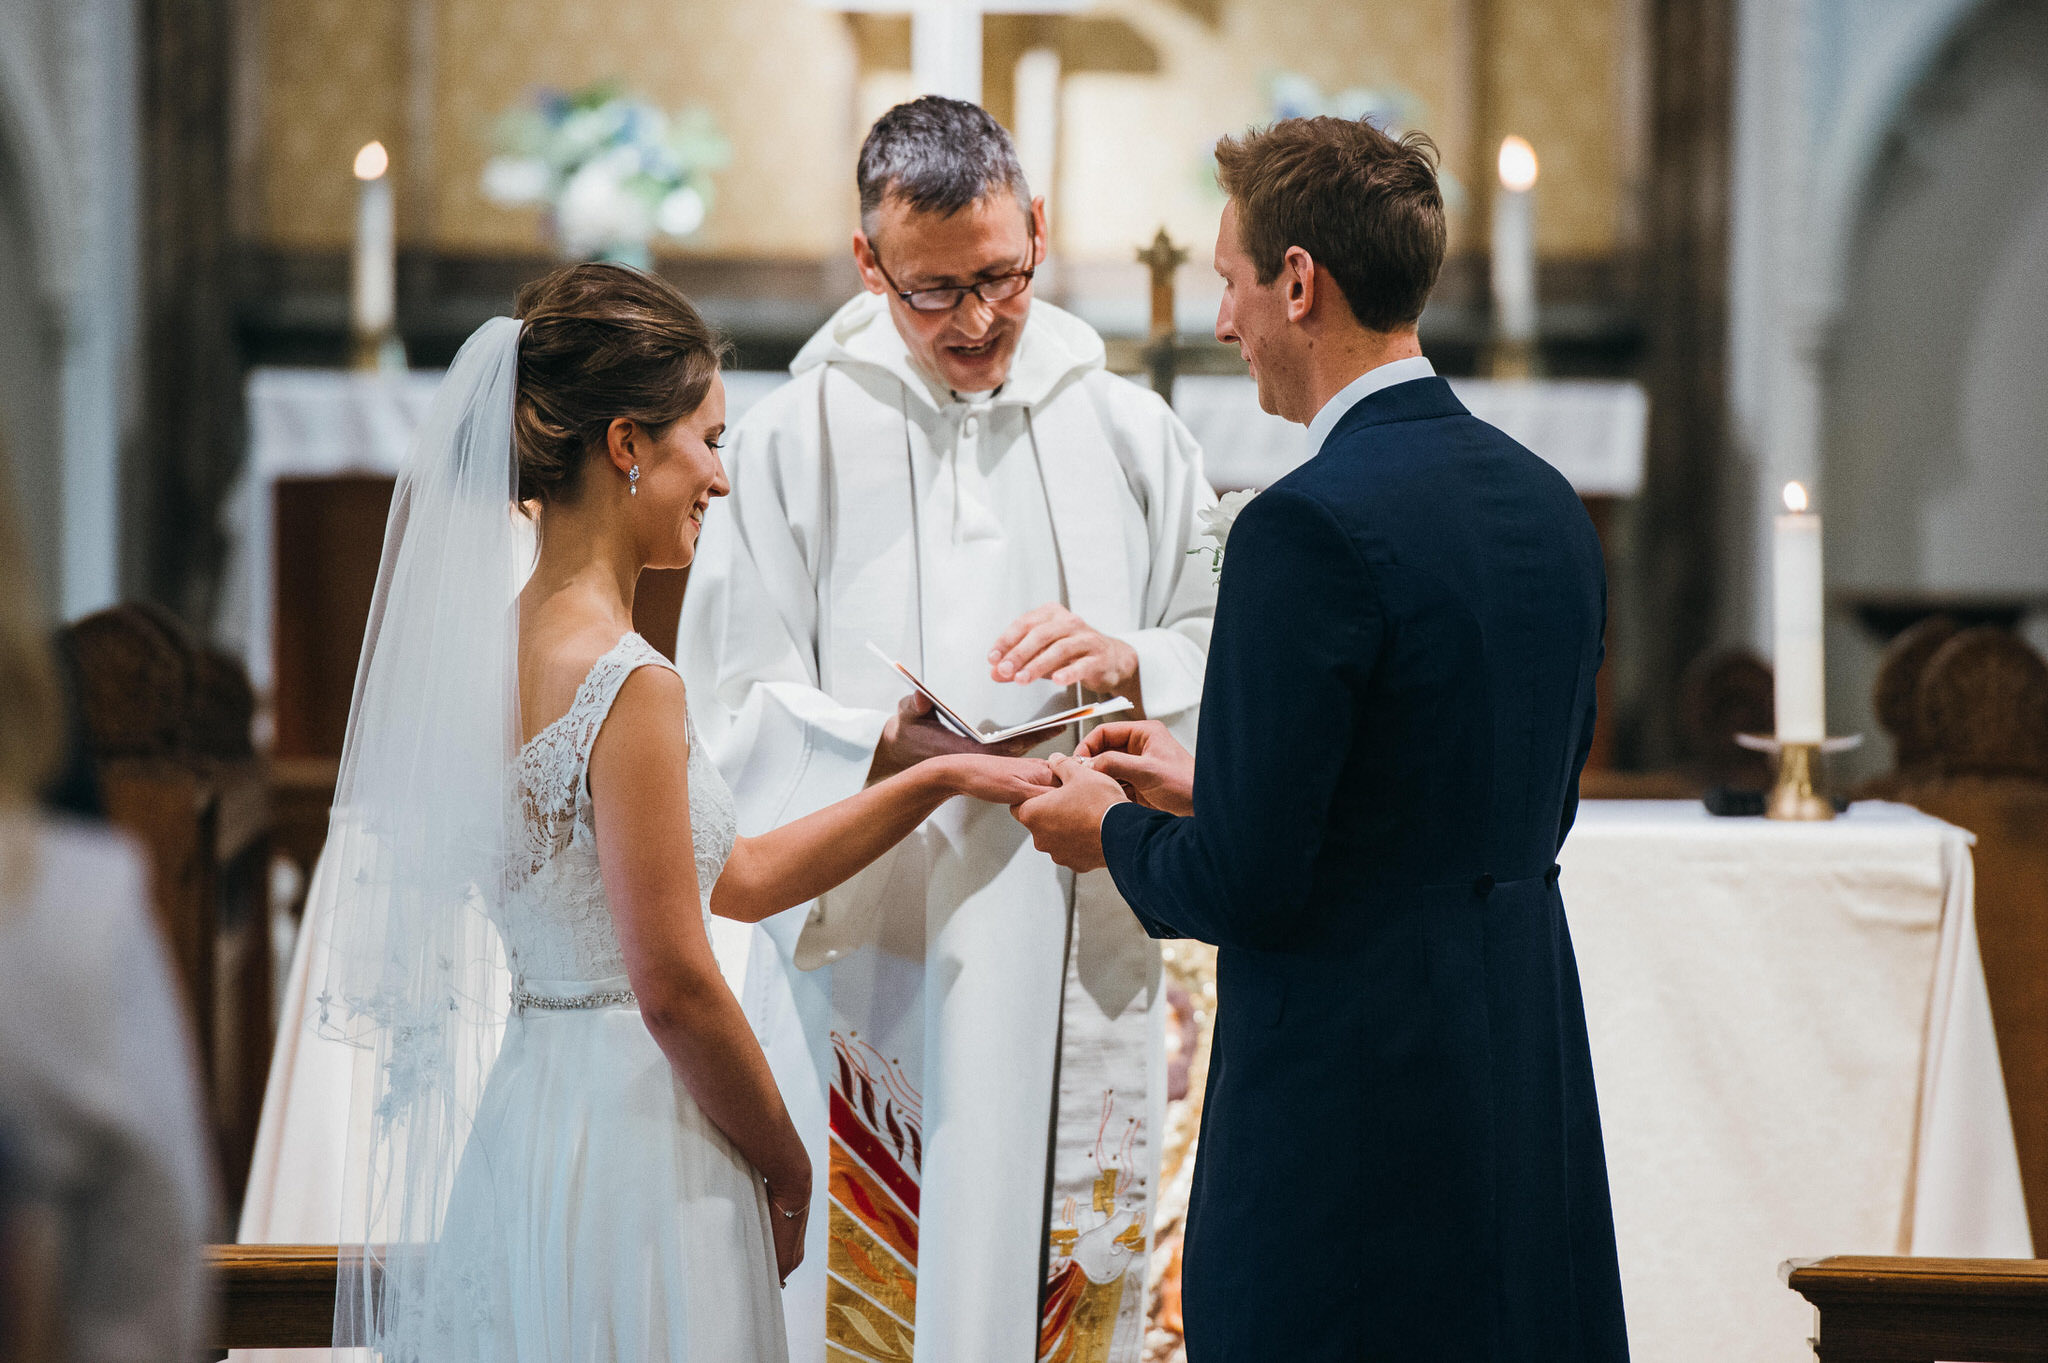 Church wedding vows 